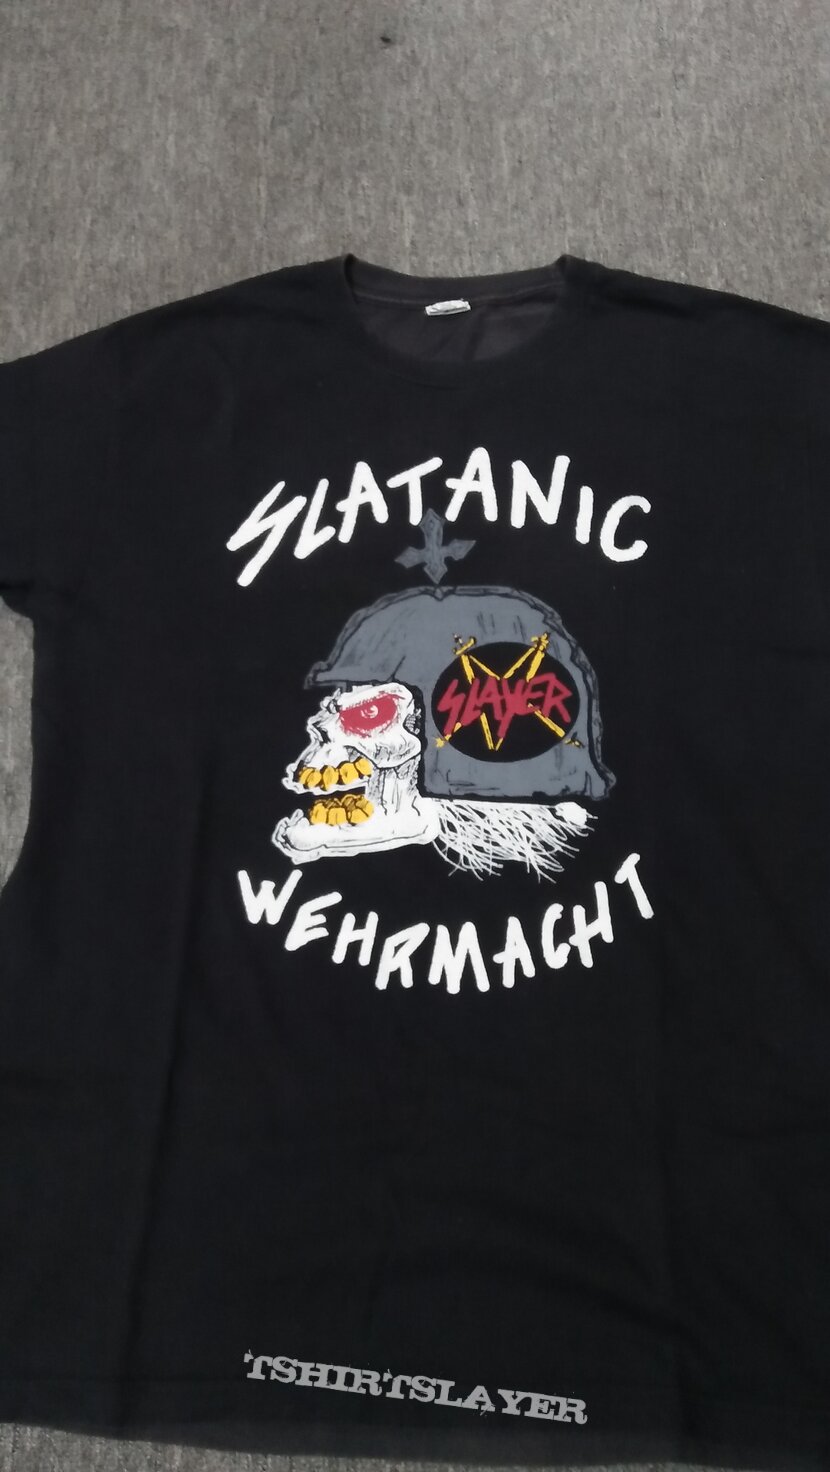 Slayer - Slaytanic Wehrmacht shirt